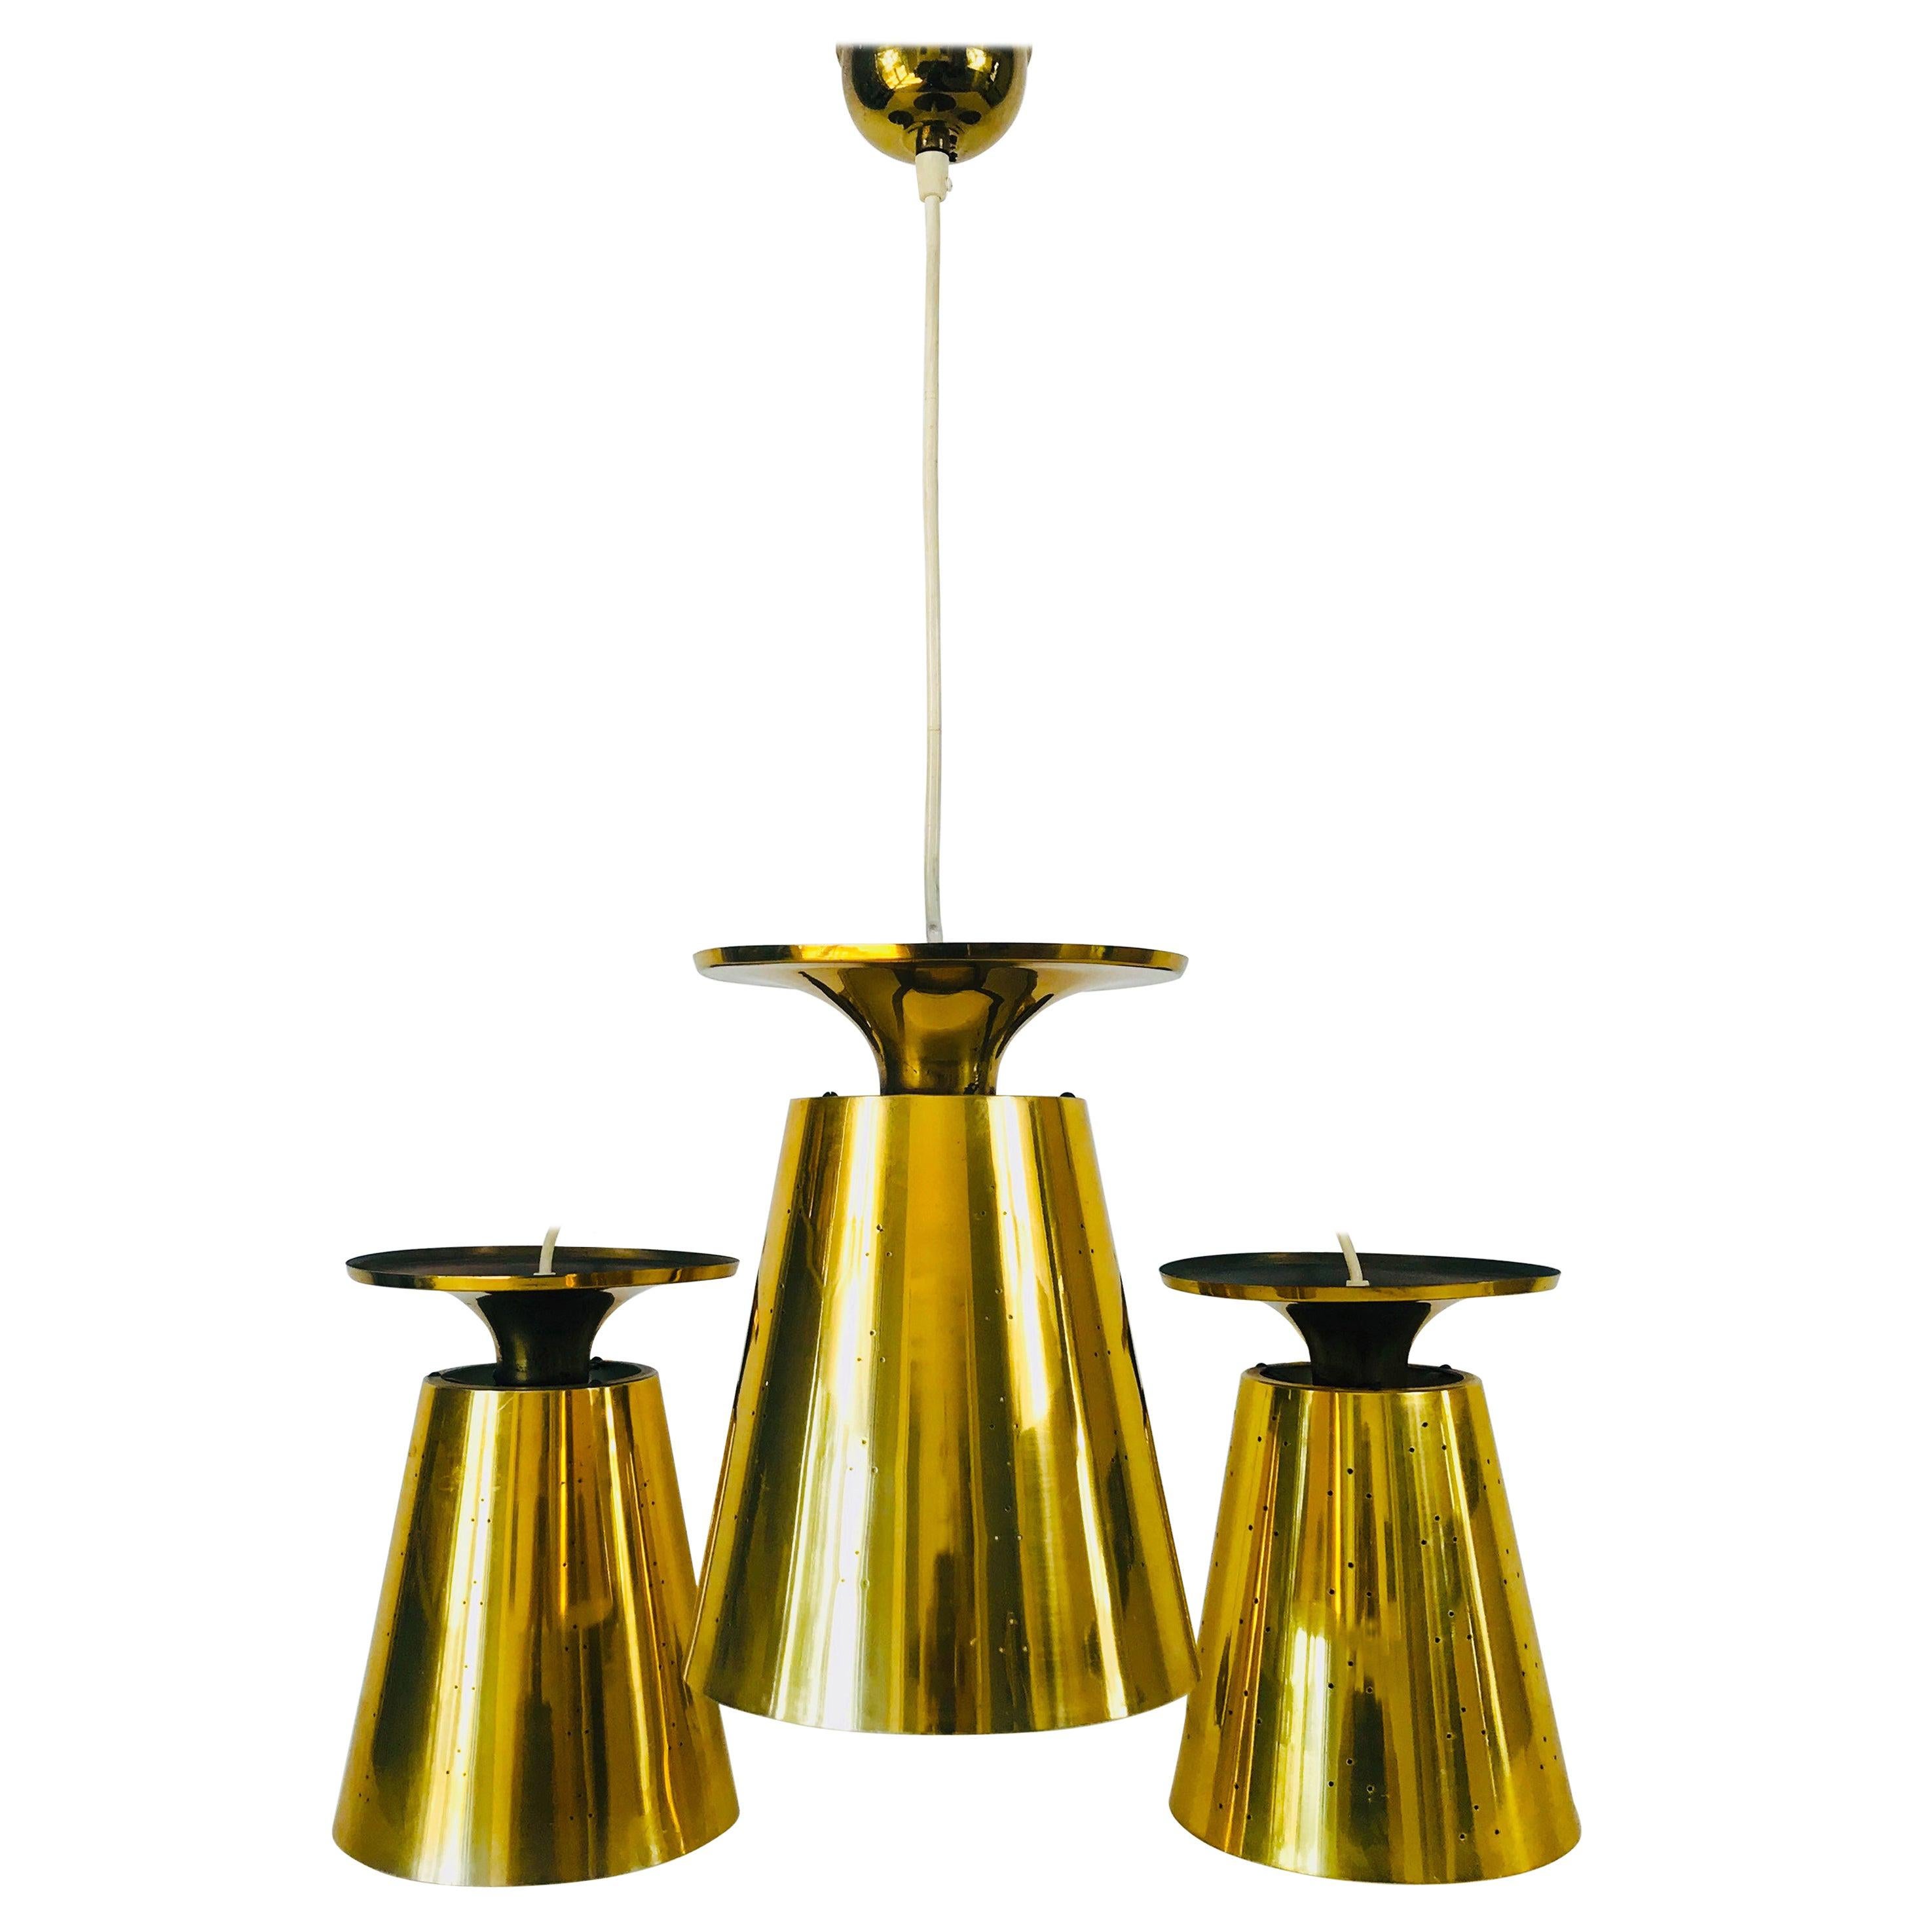 Set of 3 Polished Full Brass Mid-Century Modern Pendant Lamps by Stilnovo, 1950s